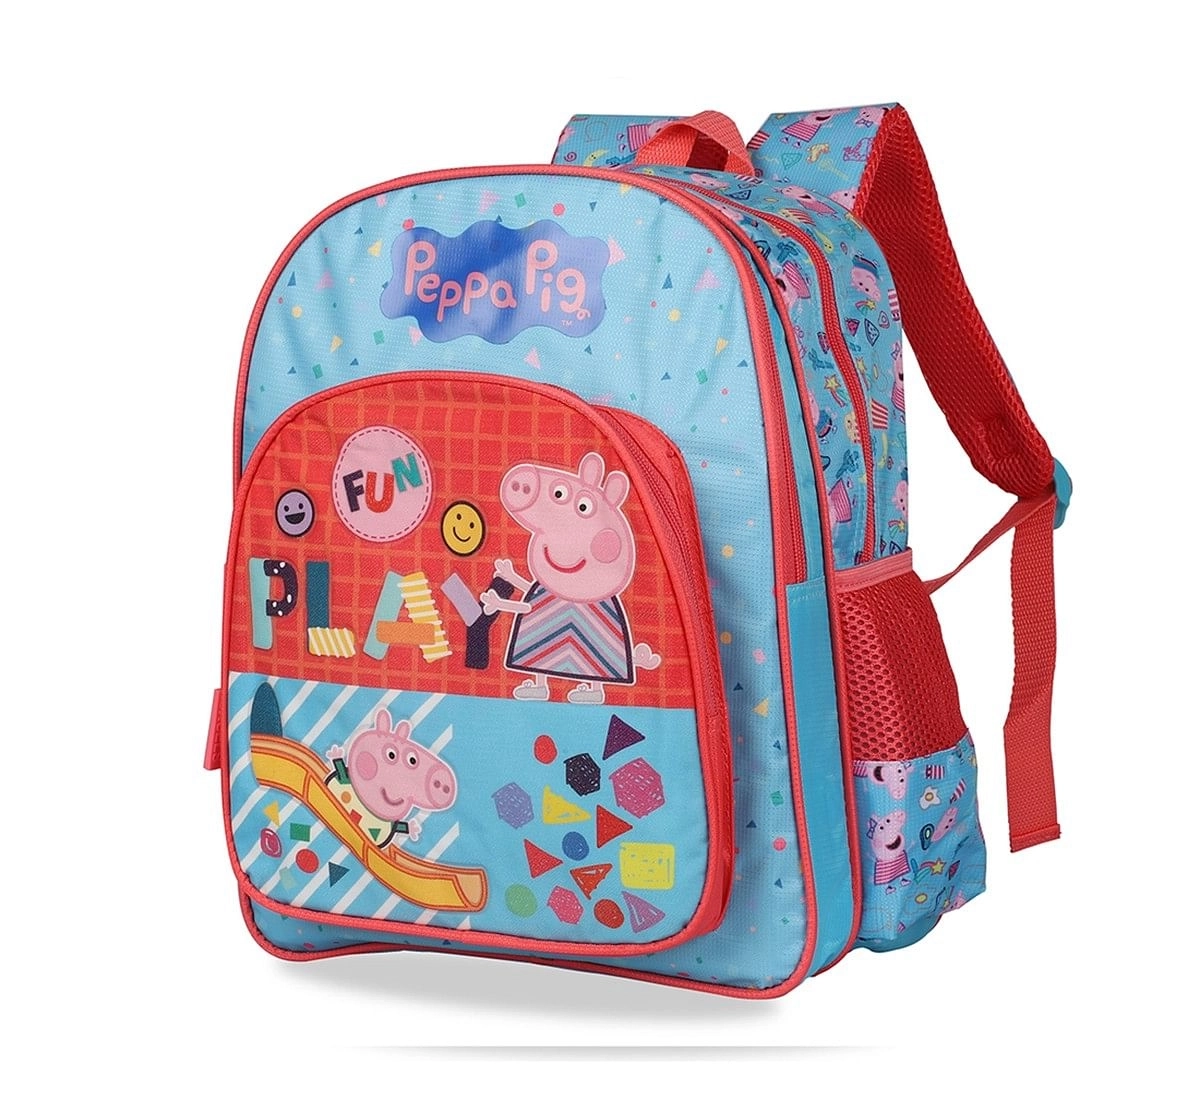 HANDBAG PEPPA PIG Bag Girls Shoulder Bag Birthday Gift Dress up Children  Peppa $23.49 - PicClick AU